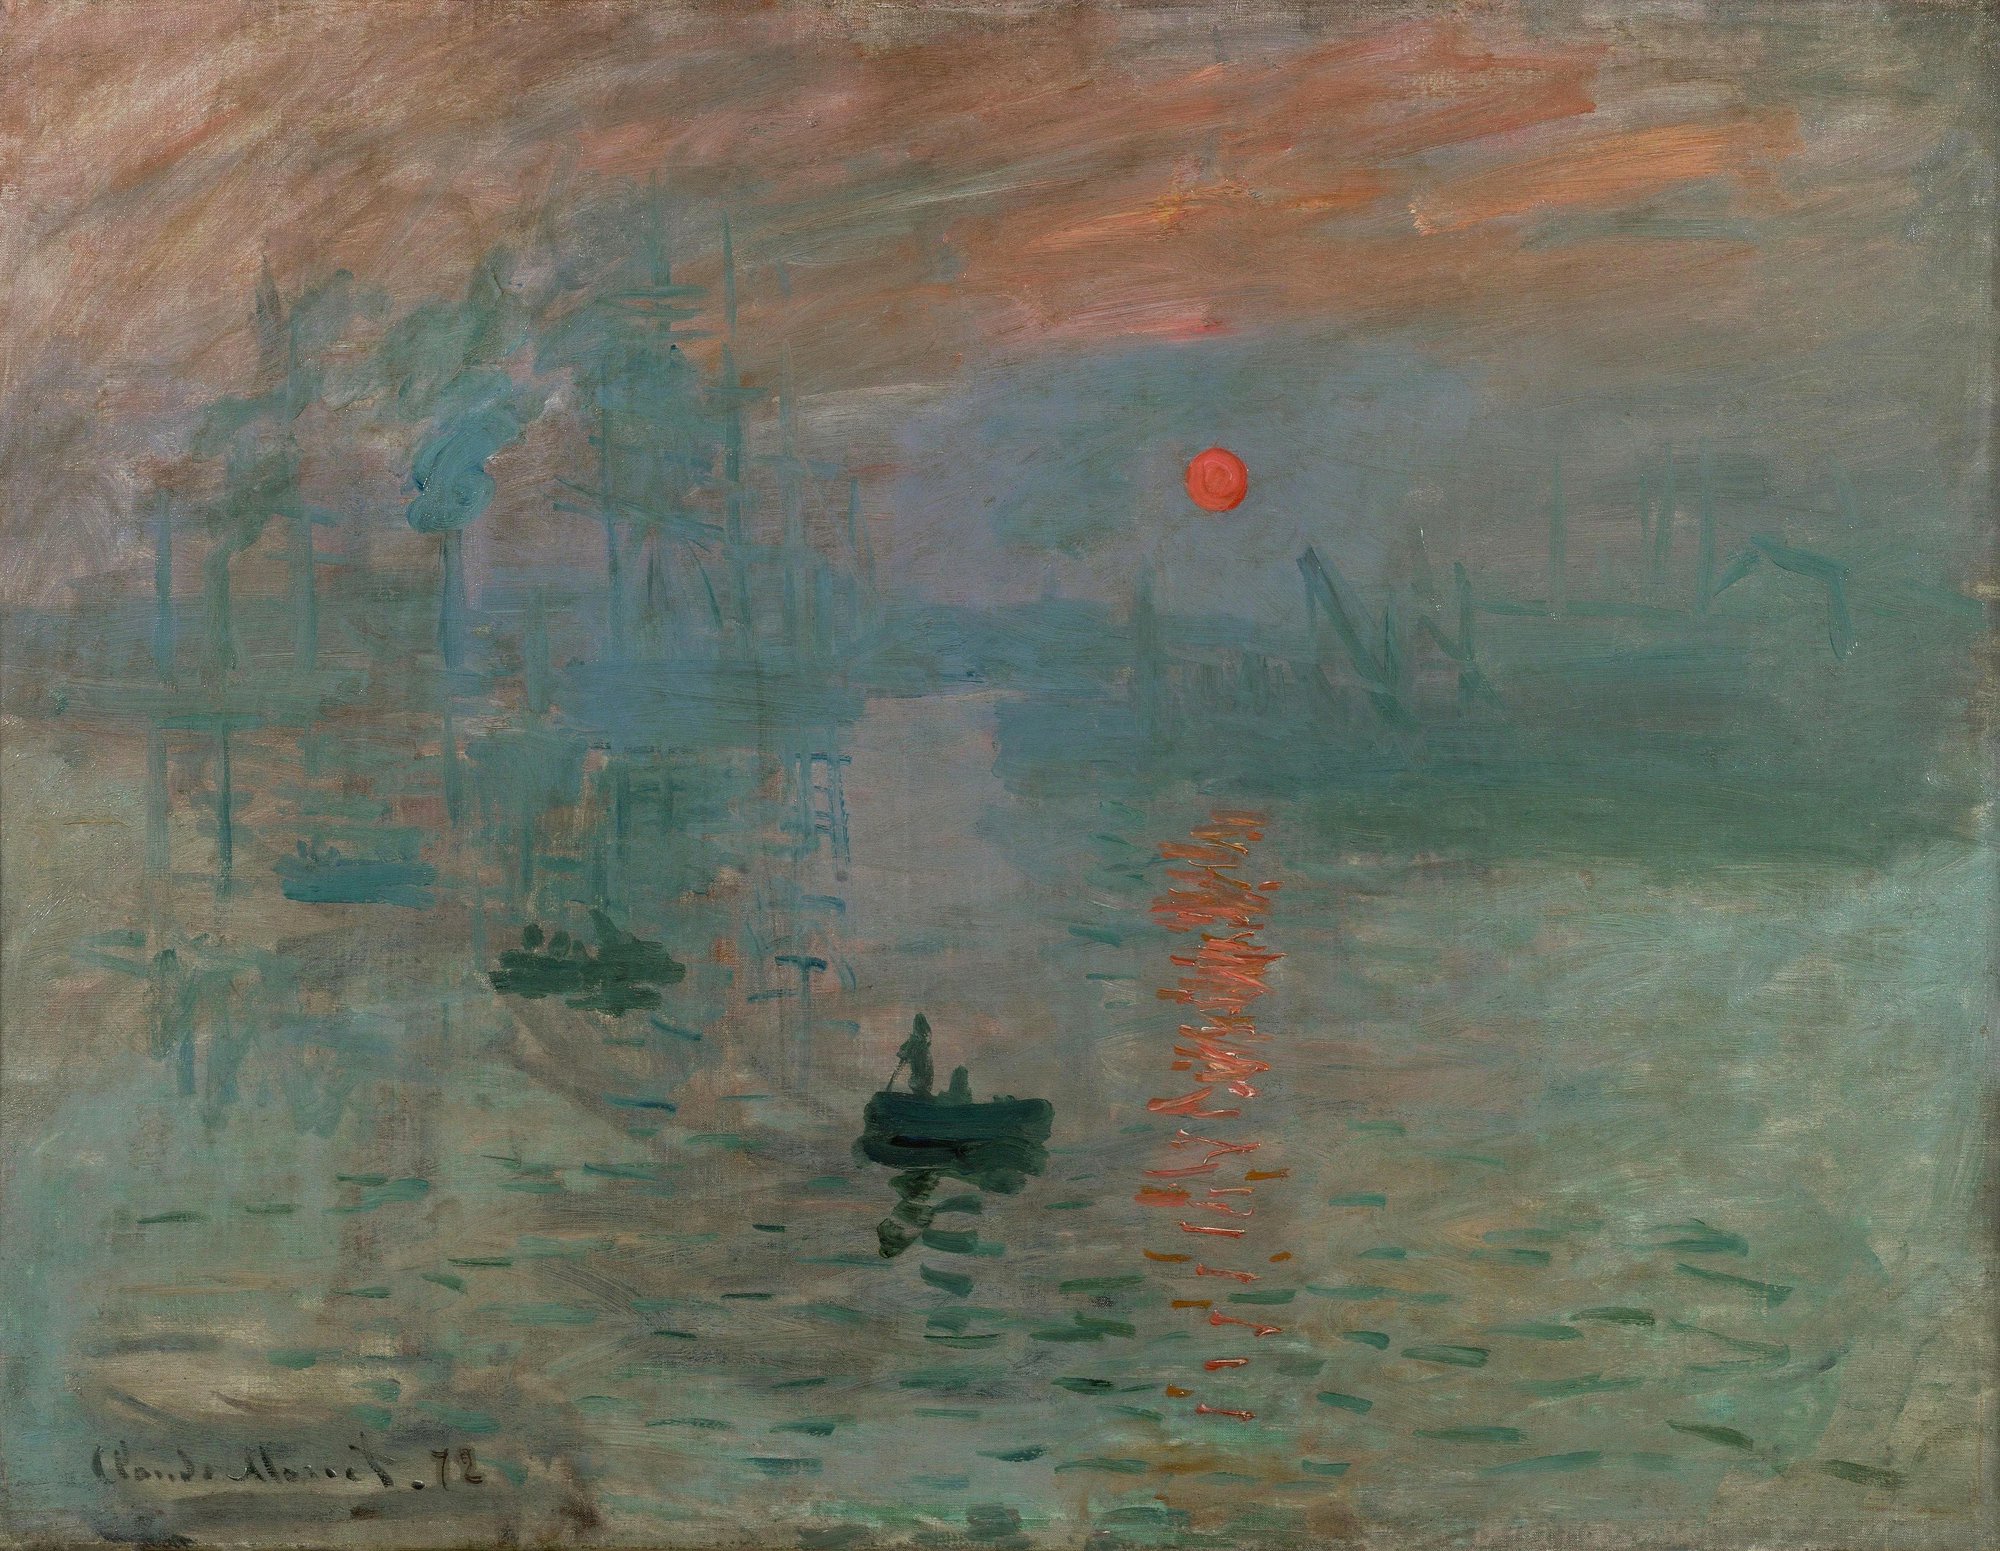 Impresión Sol Naciente de Monet